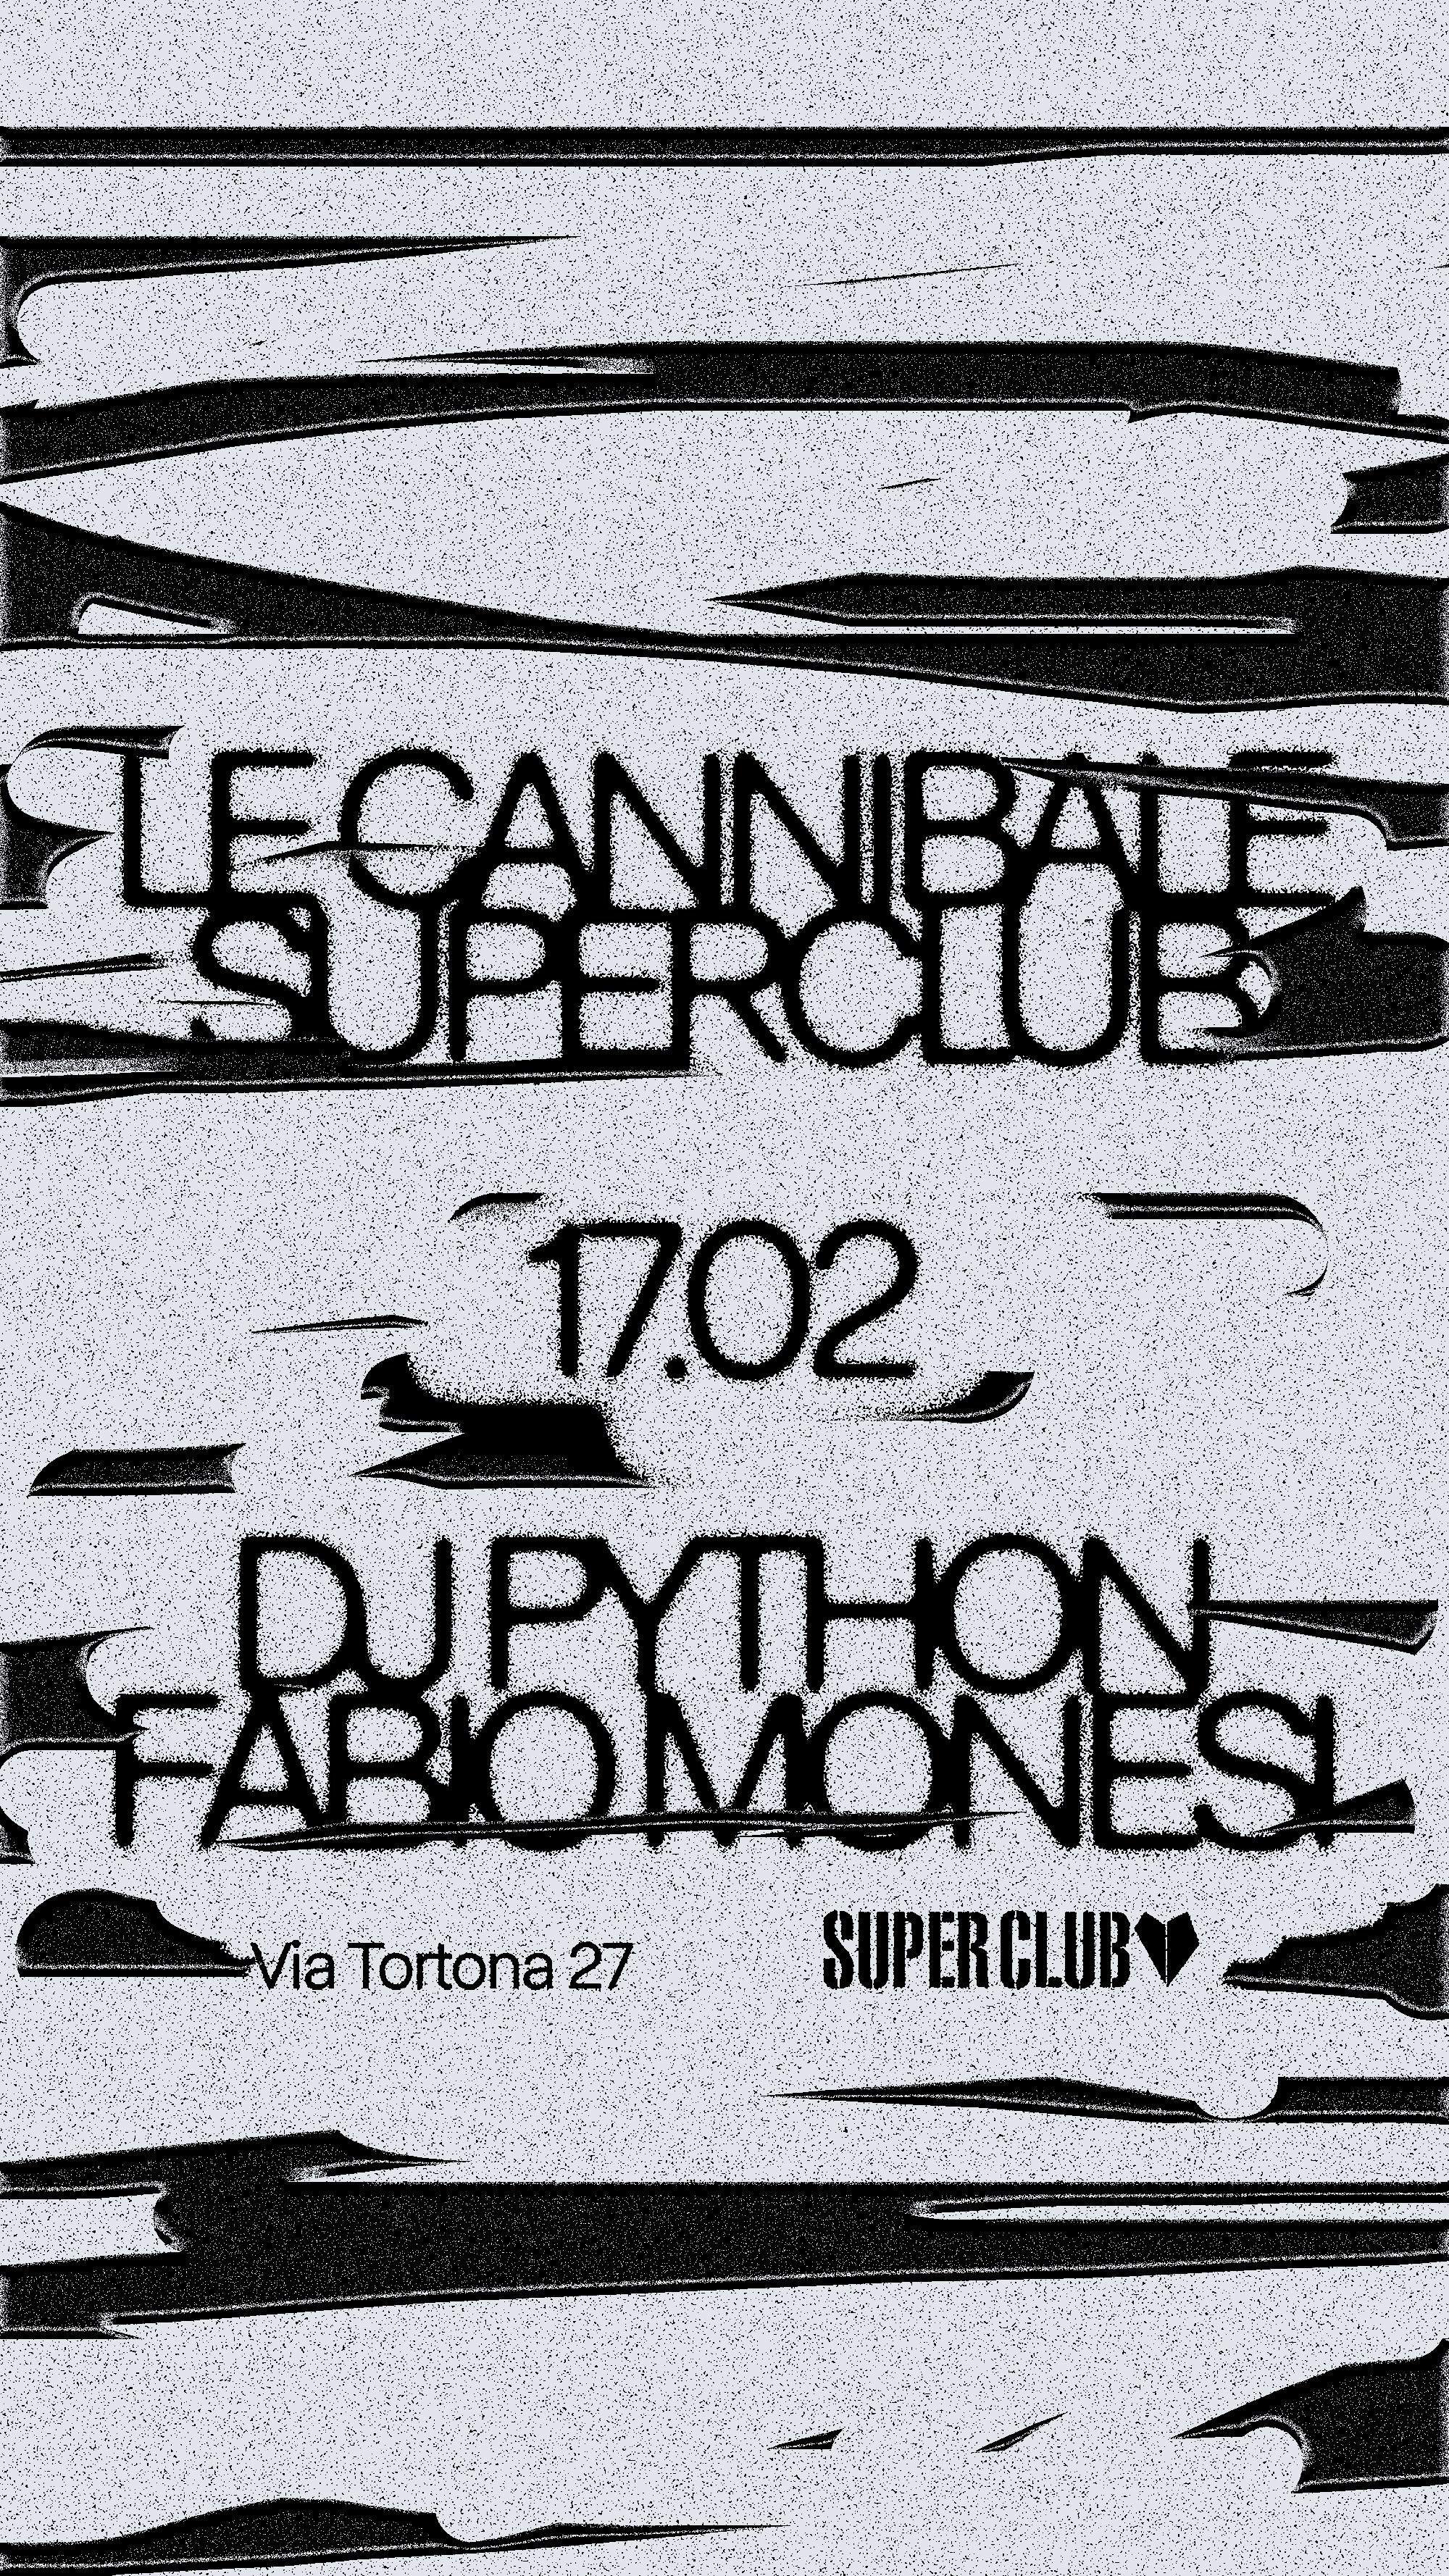 Le Cannibale Superclub - DJ Python, Fabio Monesi - フライヤー裏